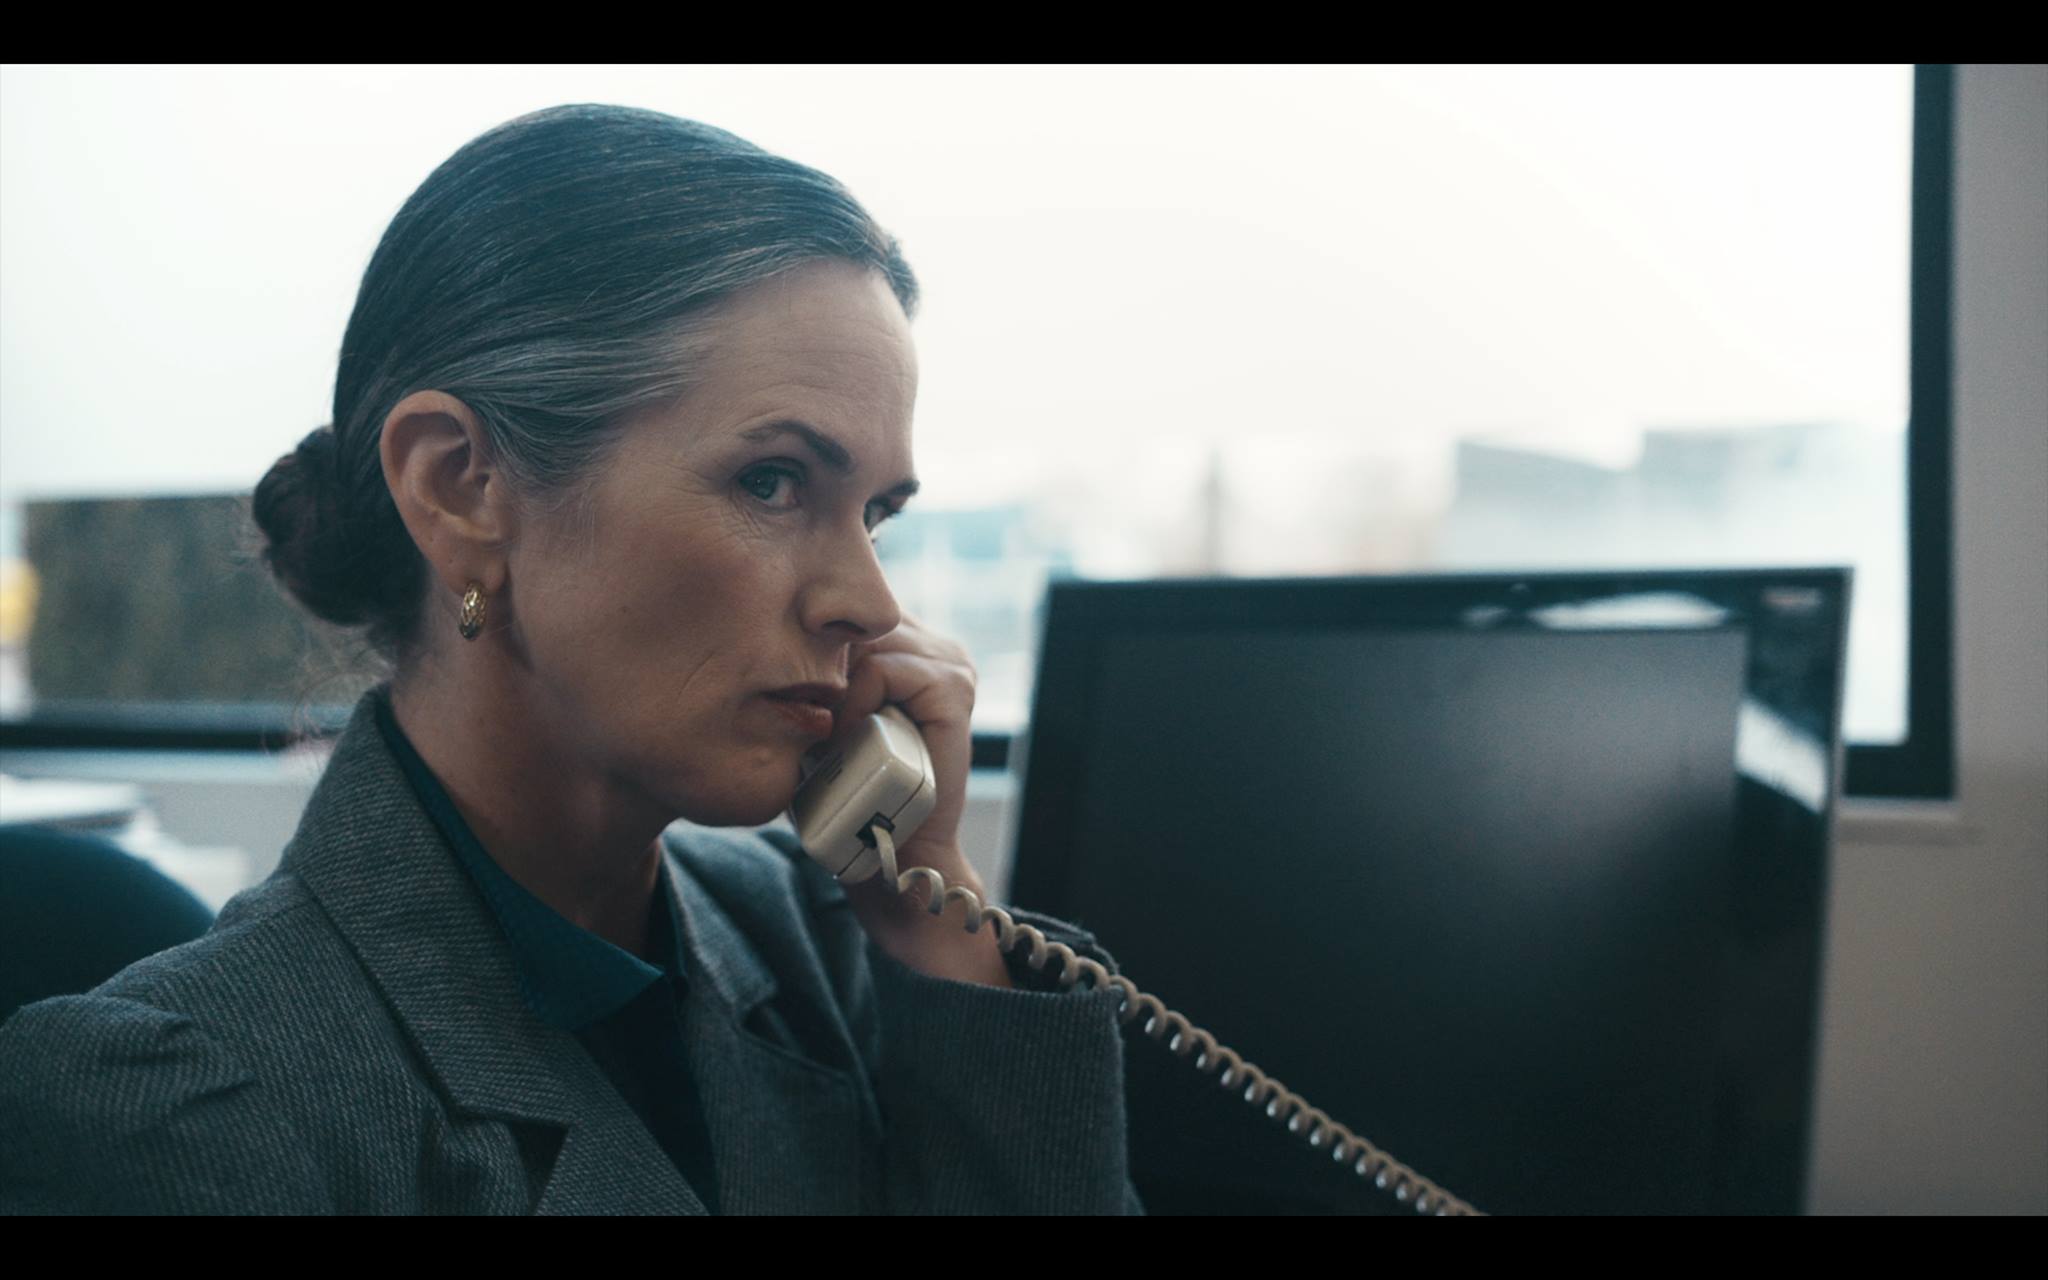 The character Diane in Michael Vidler's award-winning short 